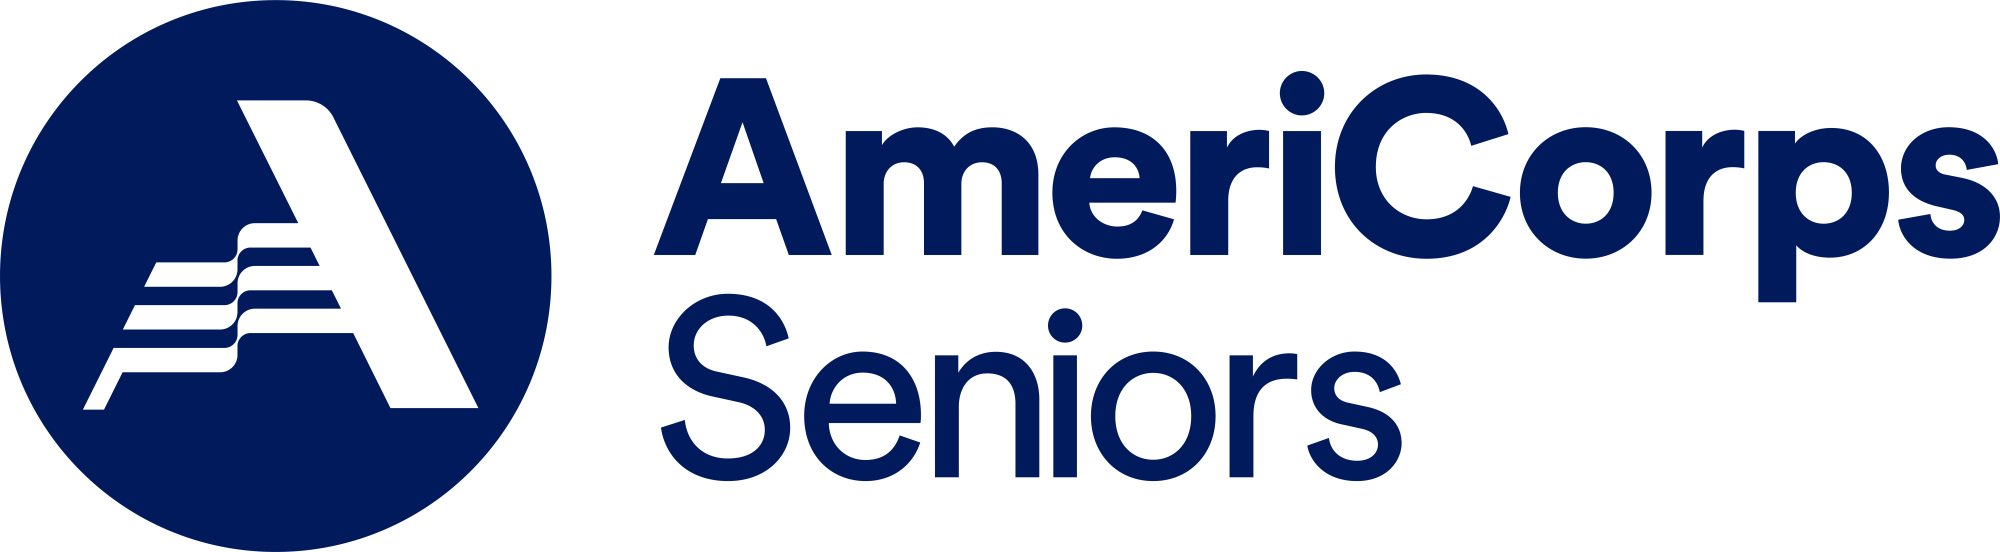 AmeriCorps Seniors Logo that&#039;s navy colored